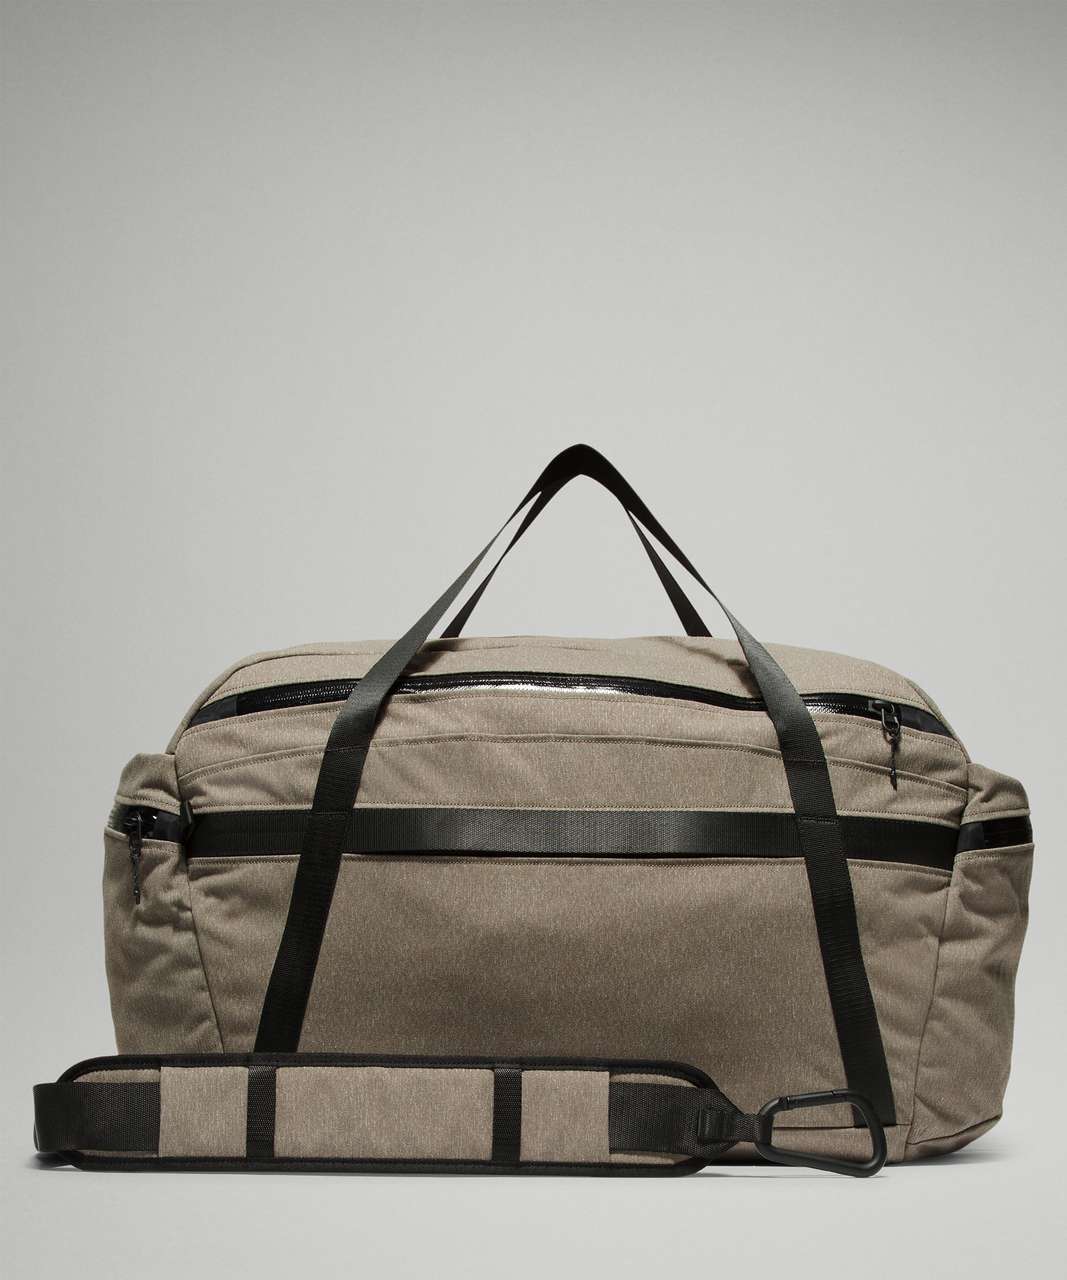 Lululemon Core Duffle Bag 2.0 - Heathered Rover / Black / Raw Linen